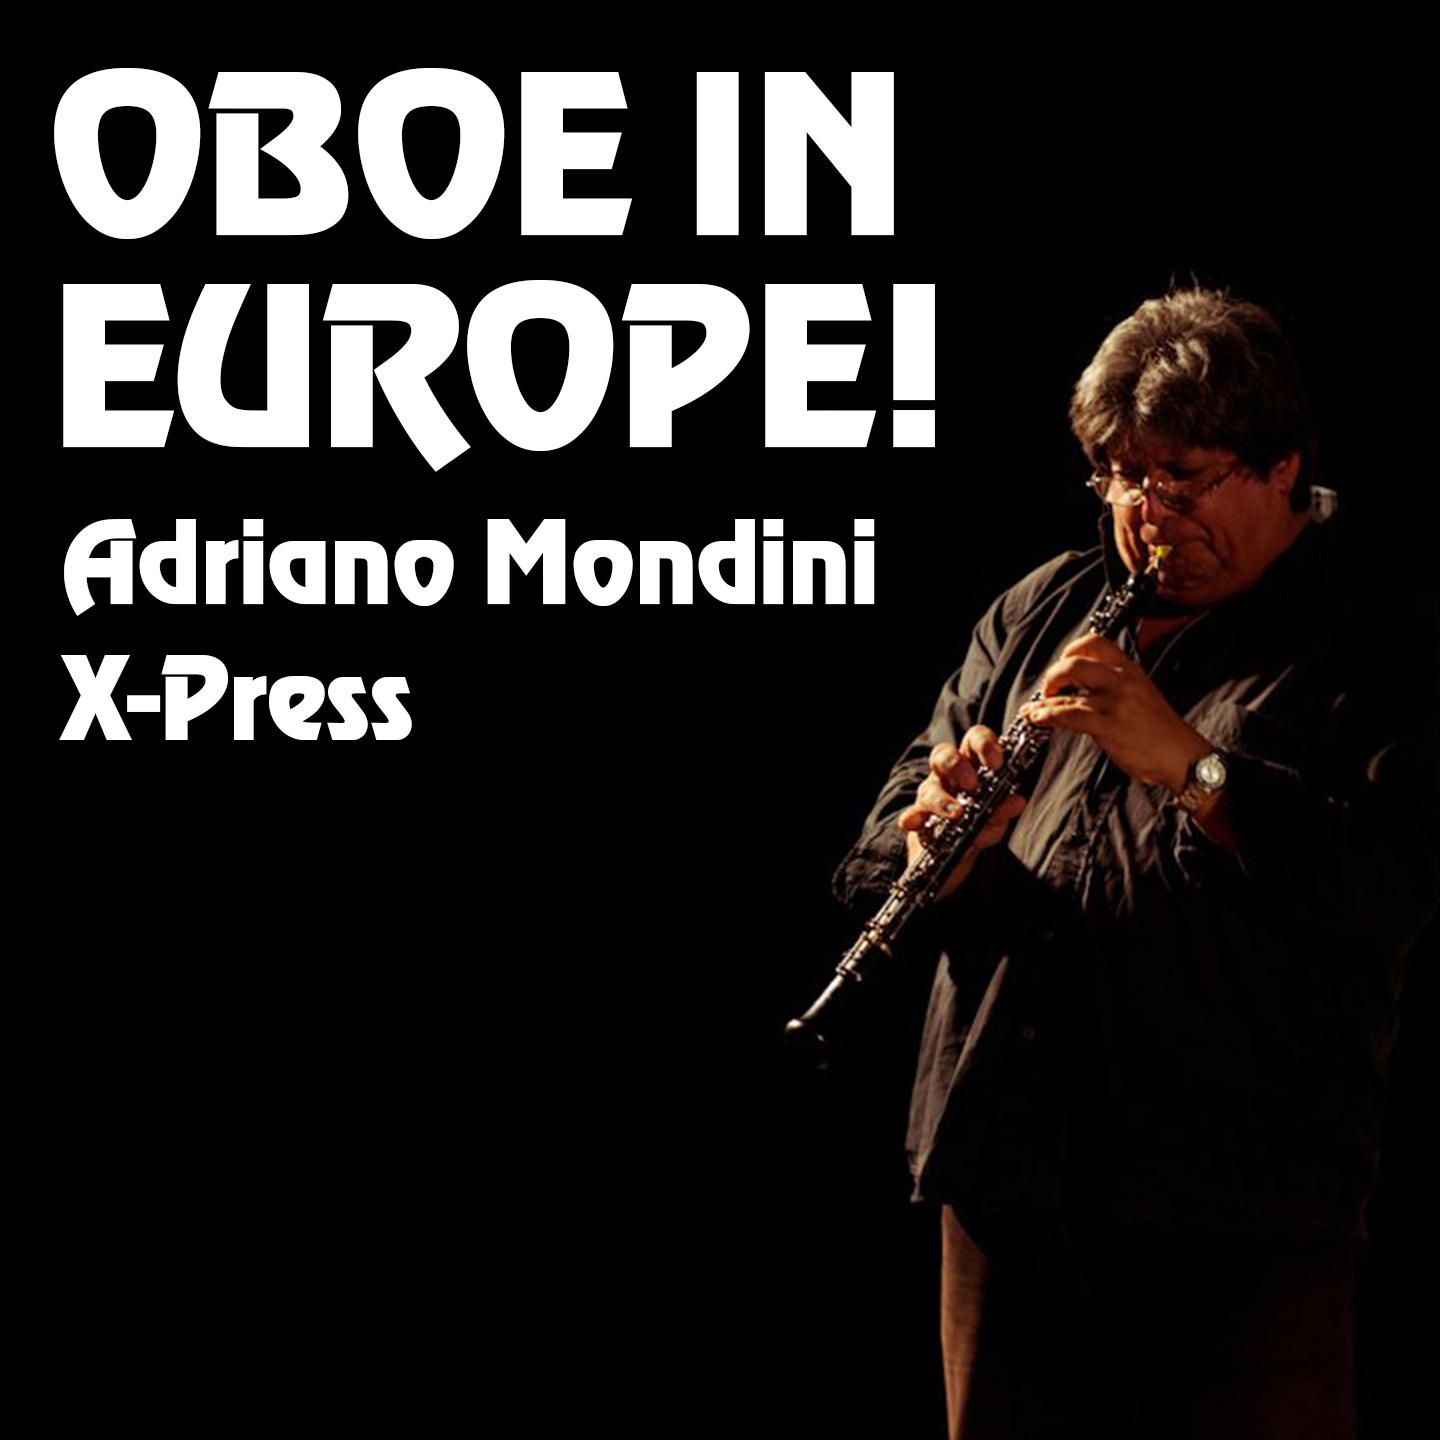 Oboe in Europe!